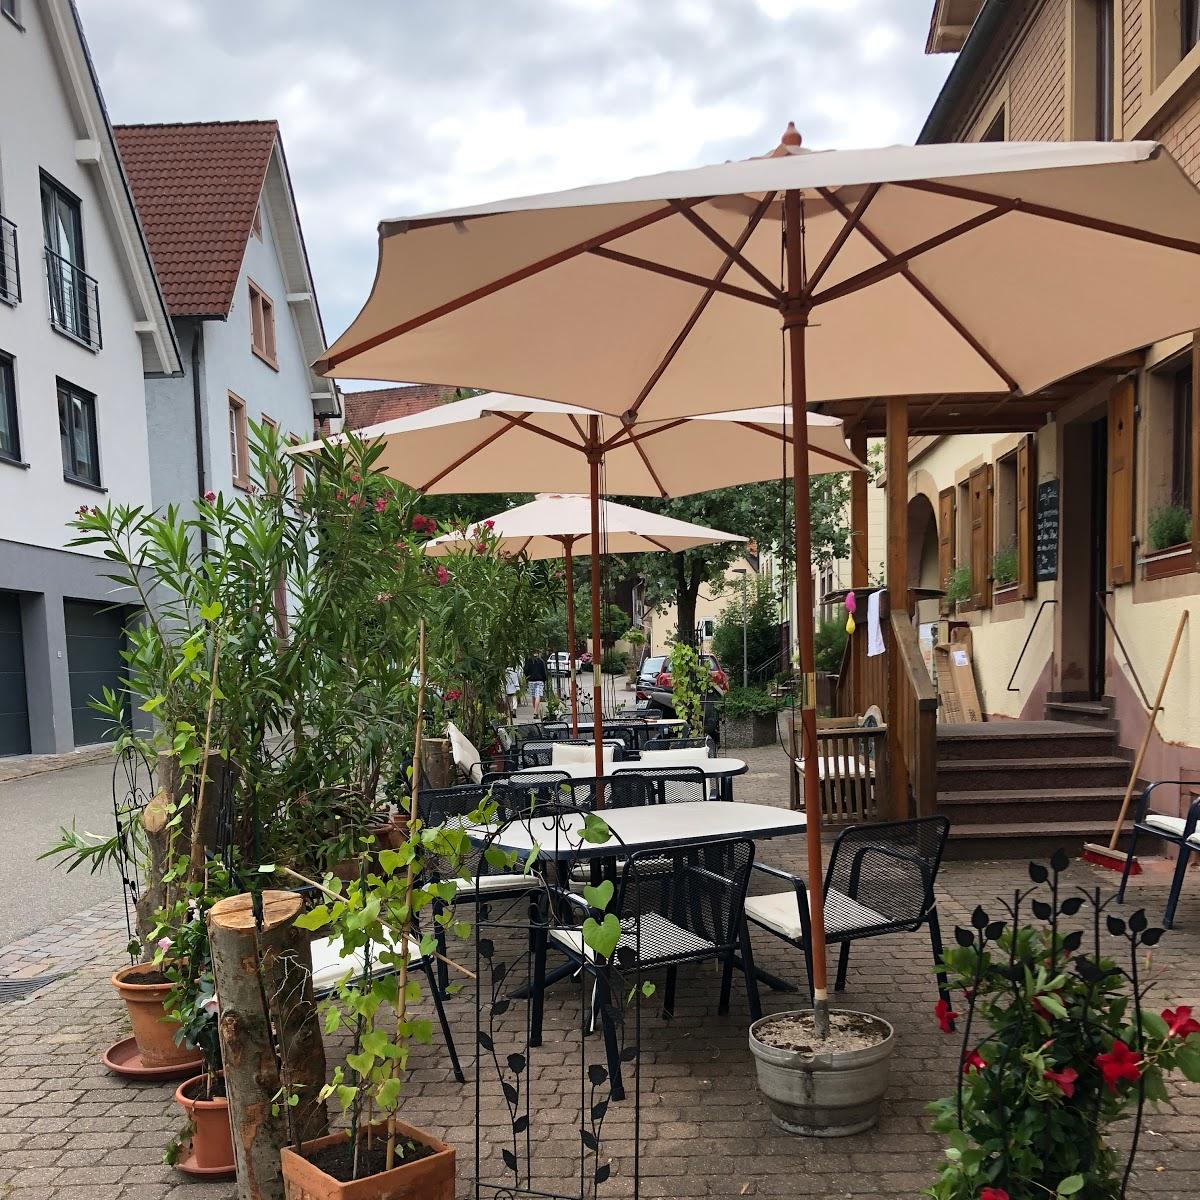 Restaurant "Landcafe Zur Sonne" in  Bammental